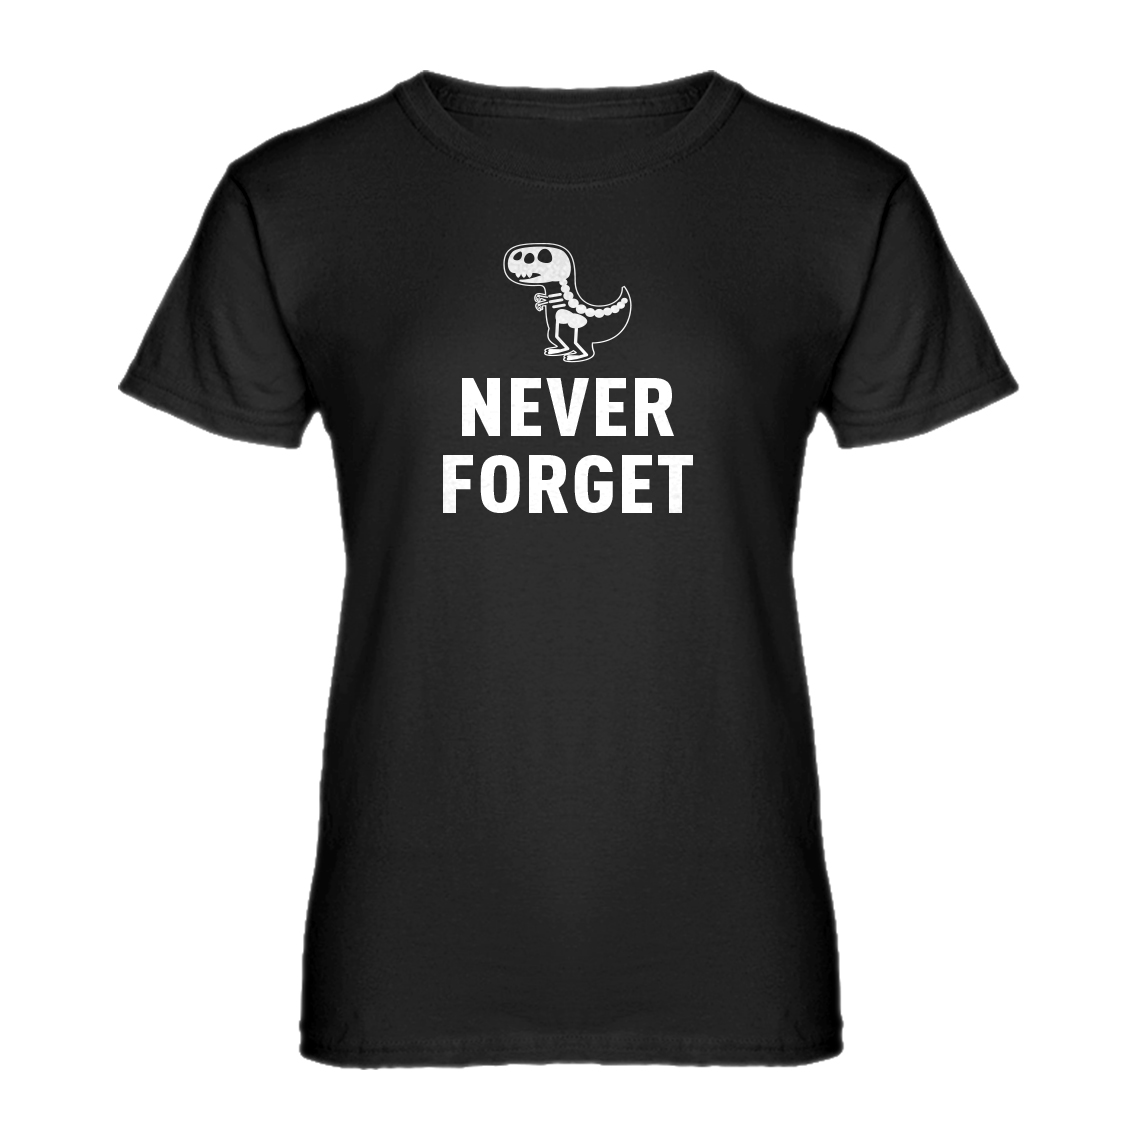 Womens Never Forget Short Sleeve T-shirt #3385 